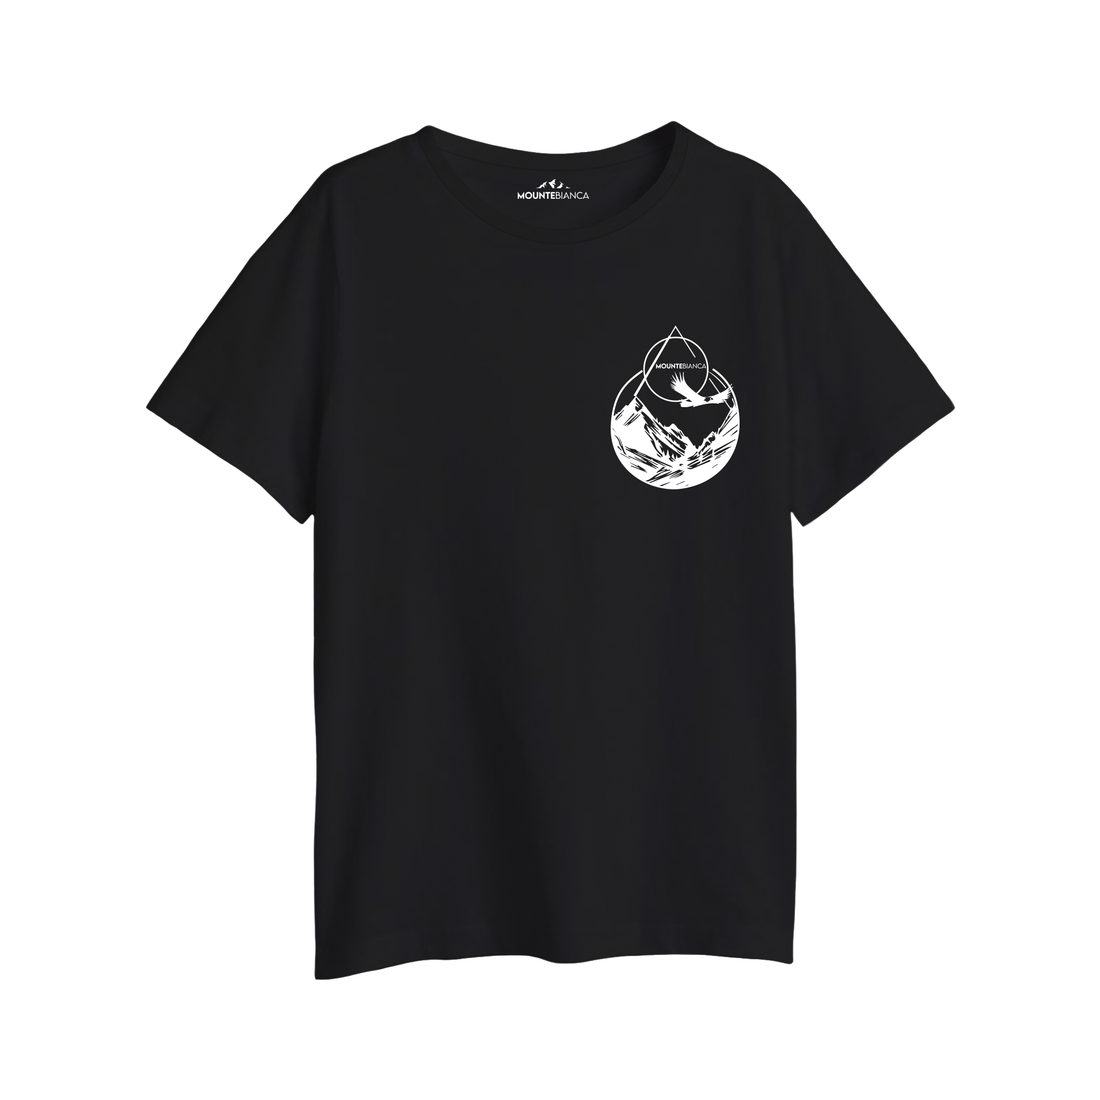 Mounte - Çocuk T-Shirt